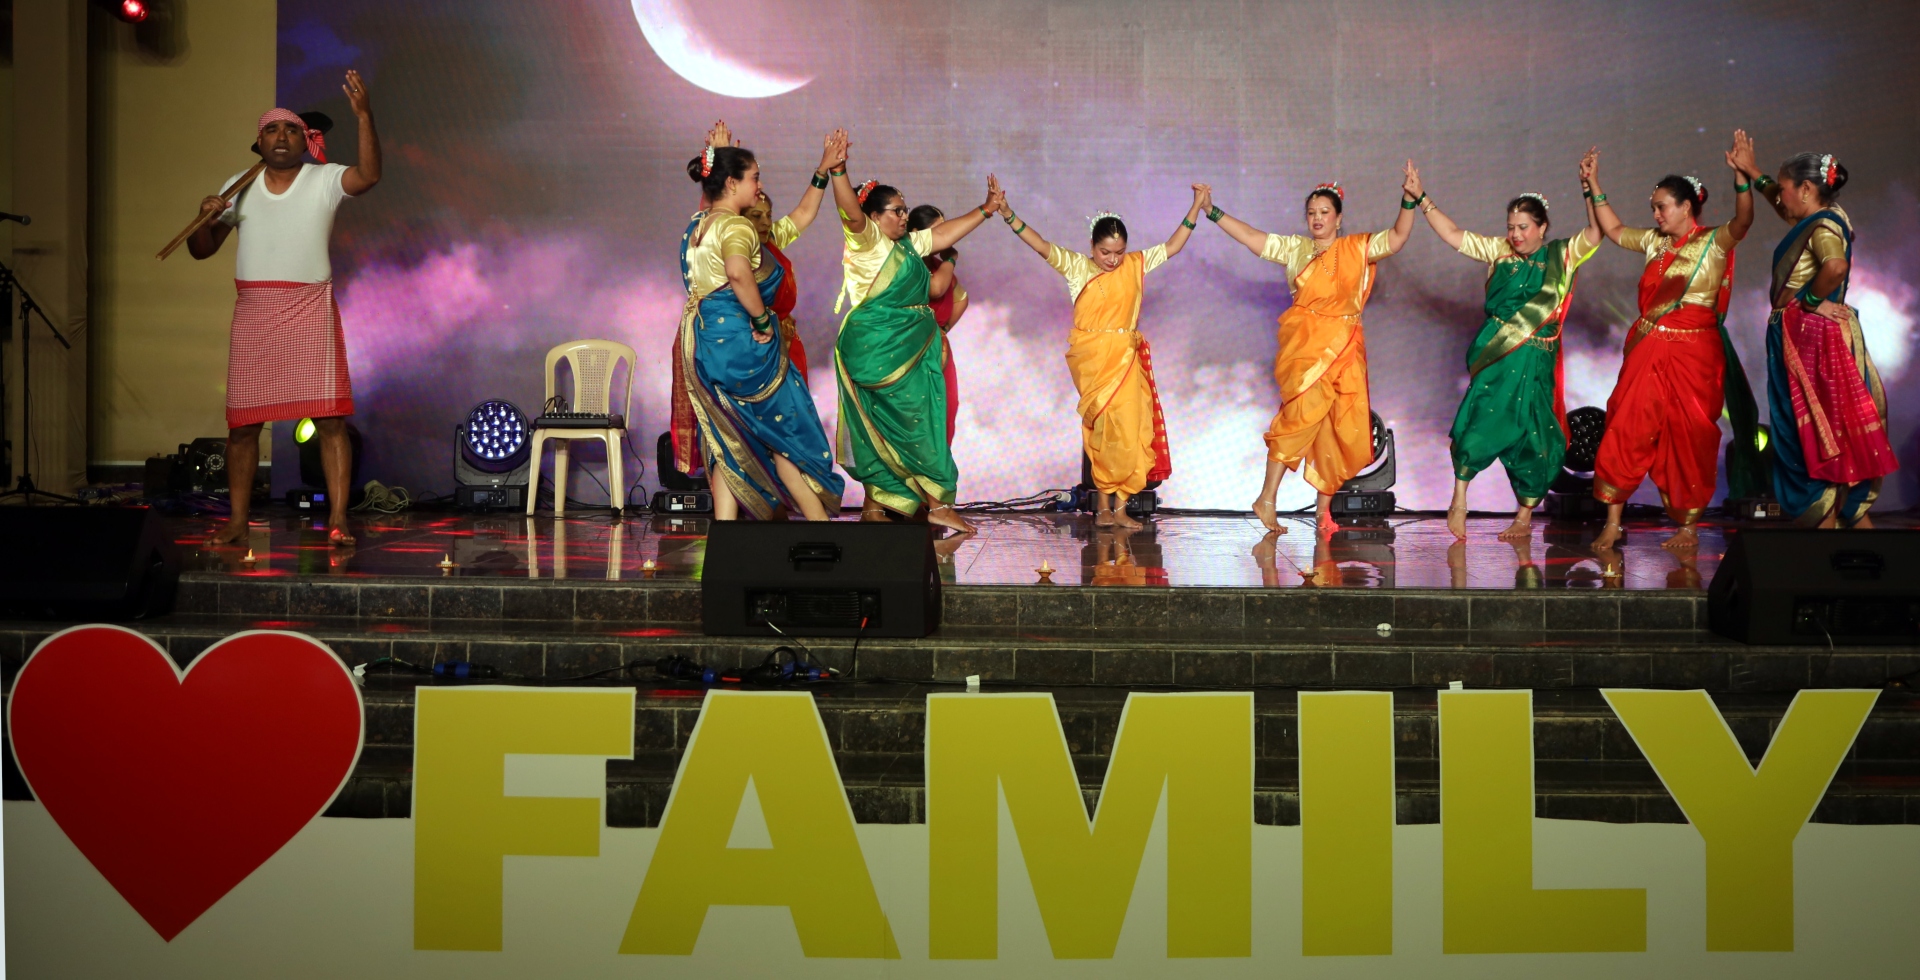 Goan music, costumes, dance take centre stage in Qatar